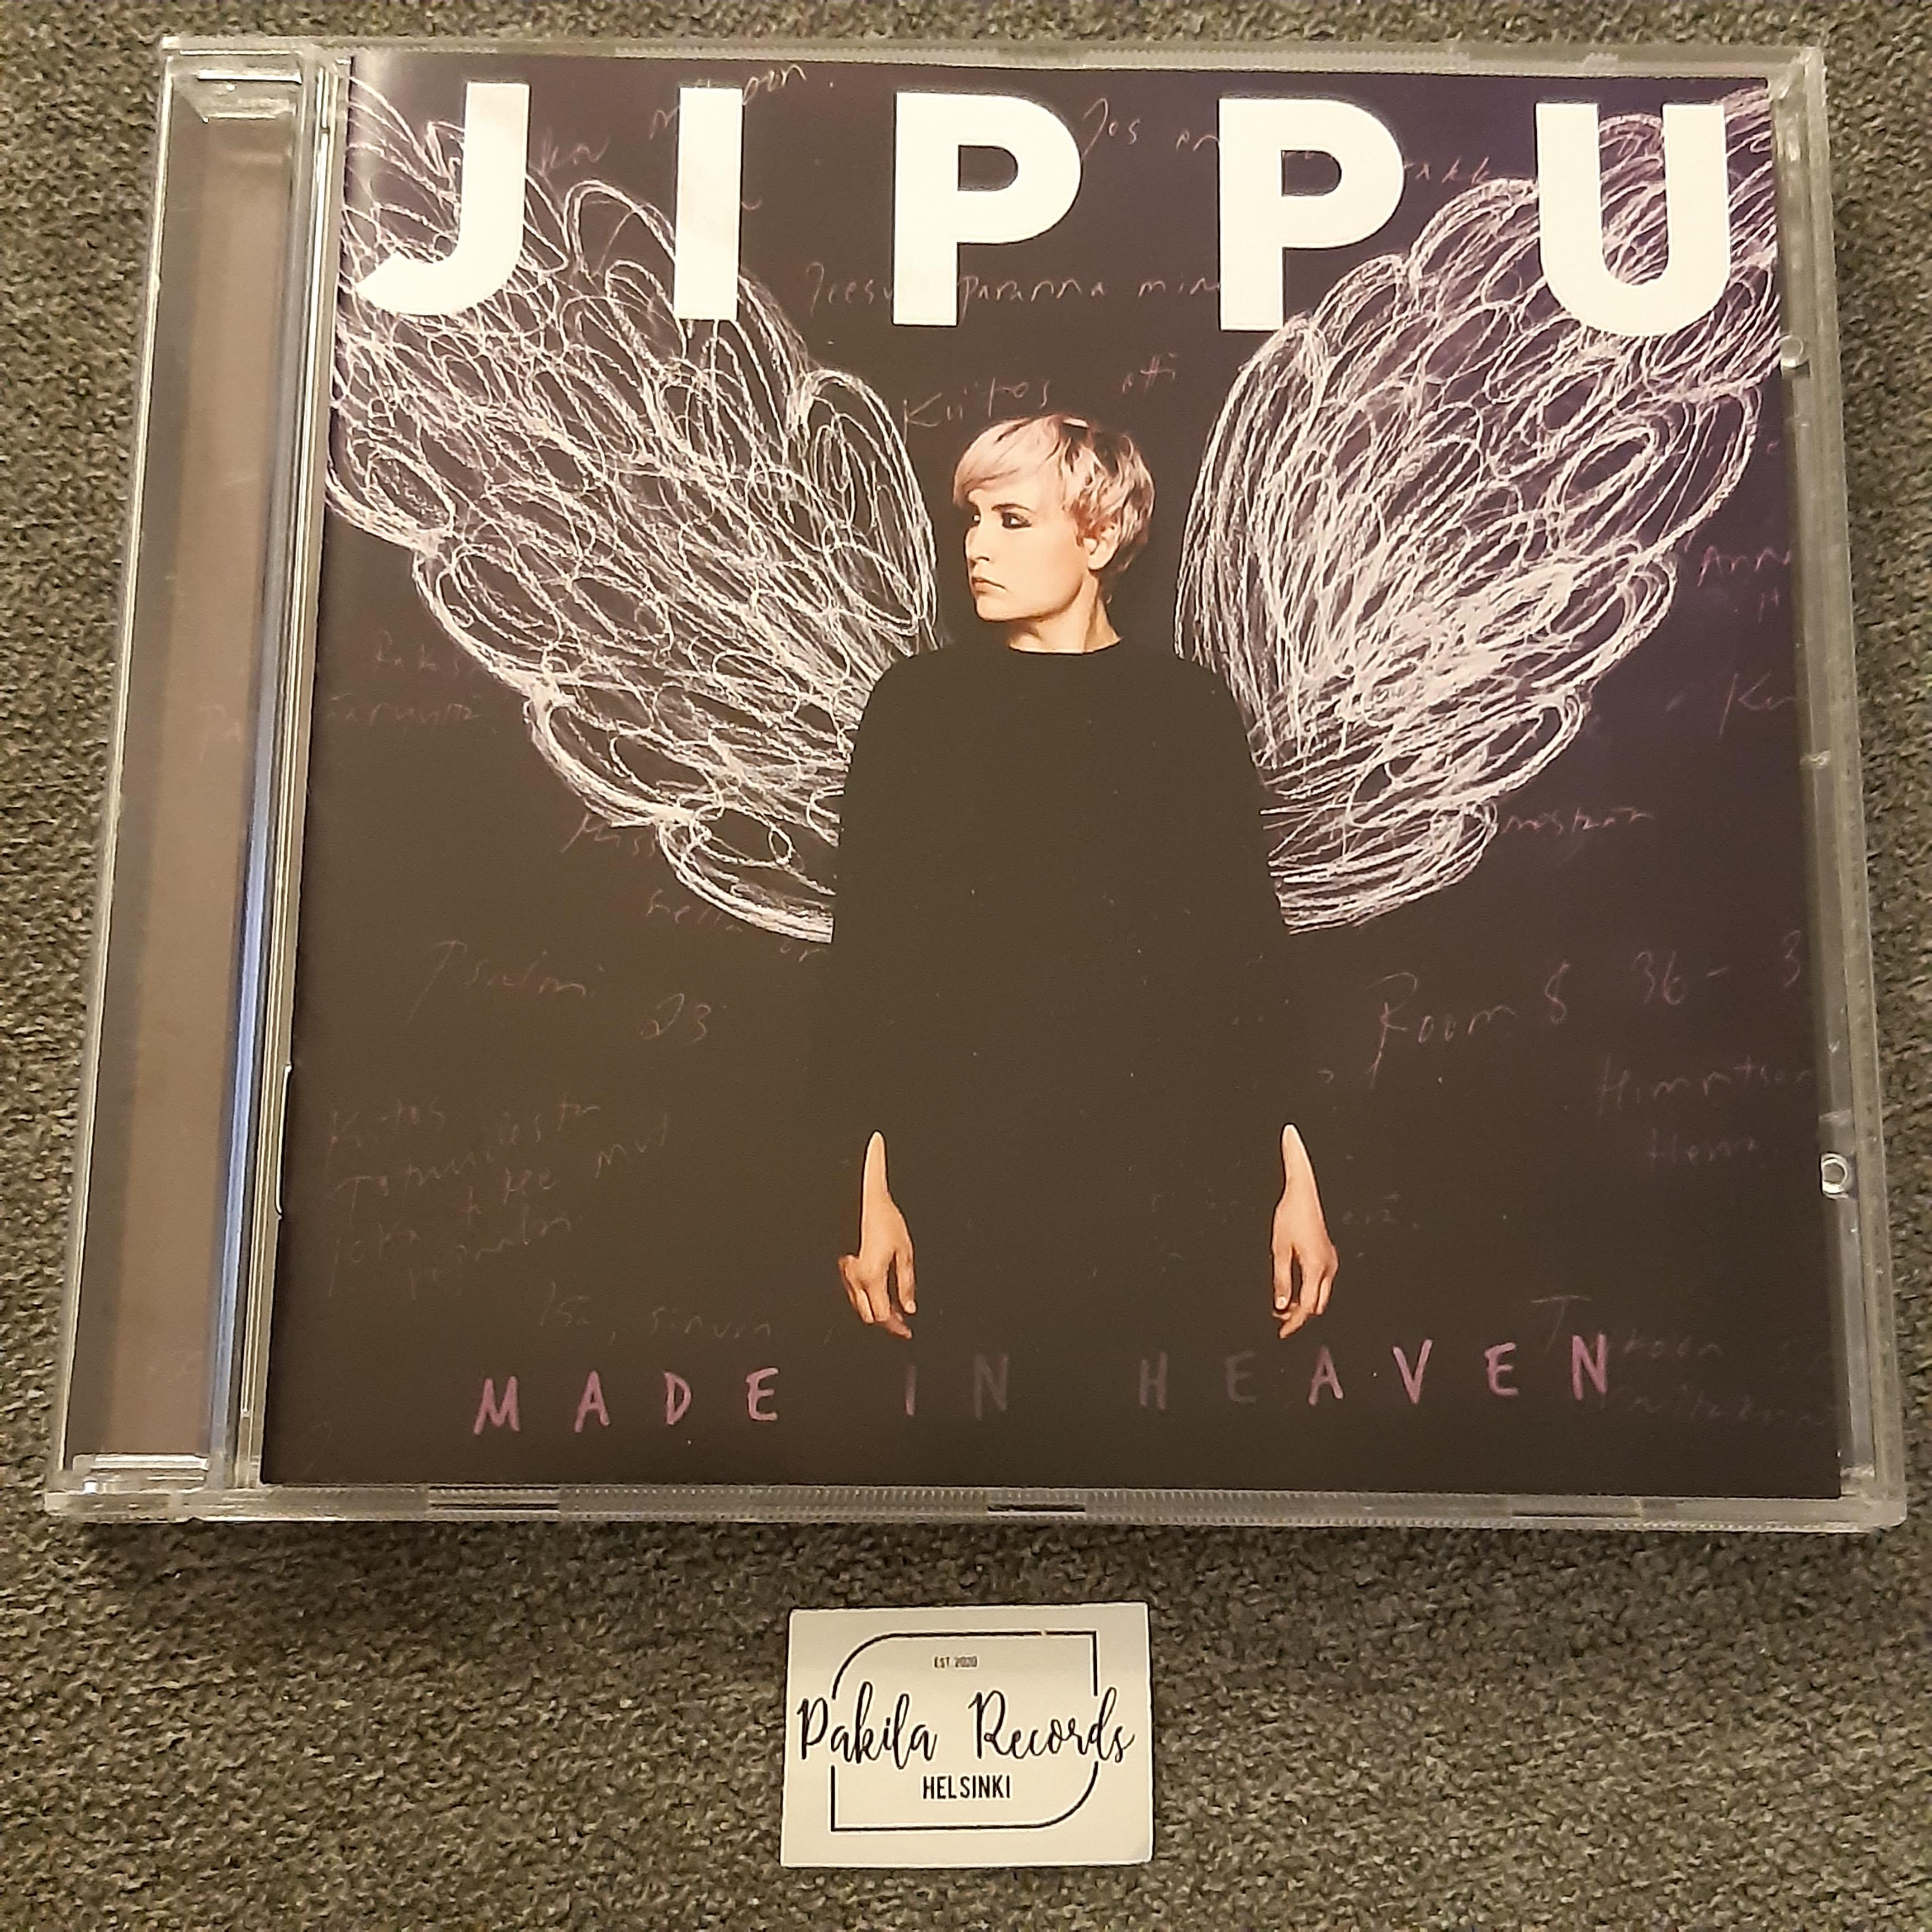 Jippu - Made In Heaven - CD (käytetty)